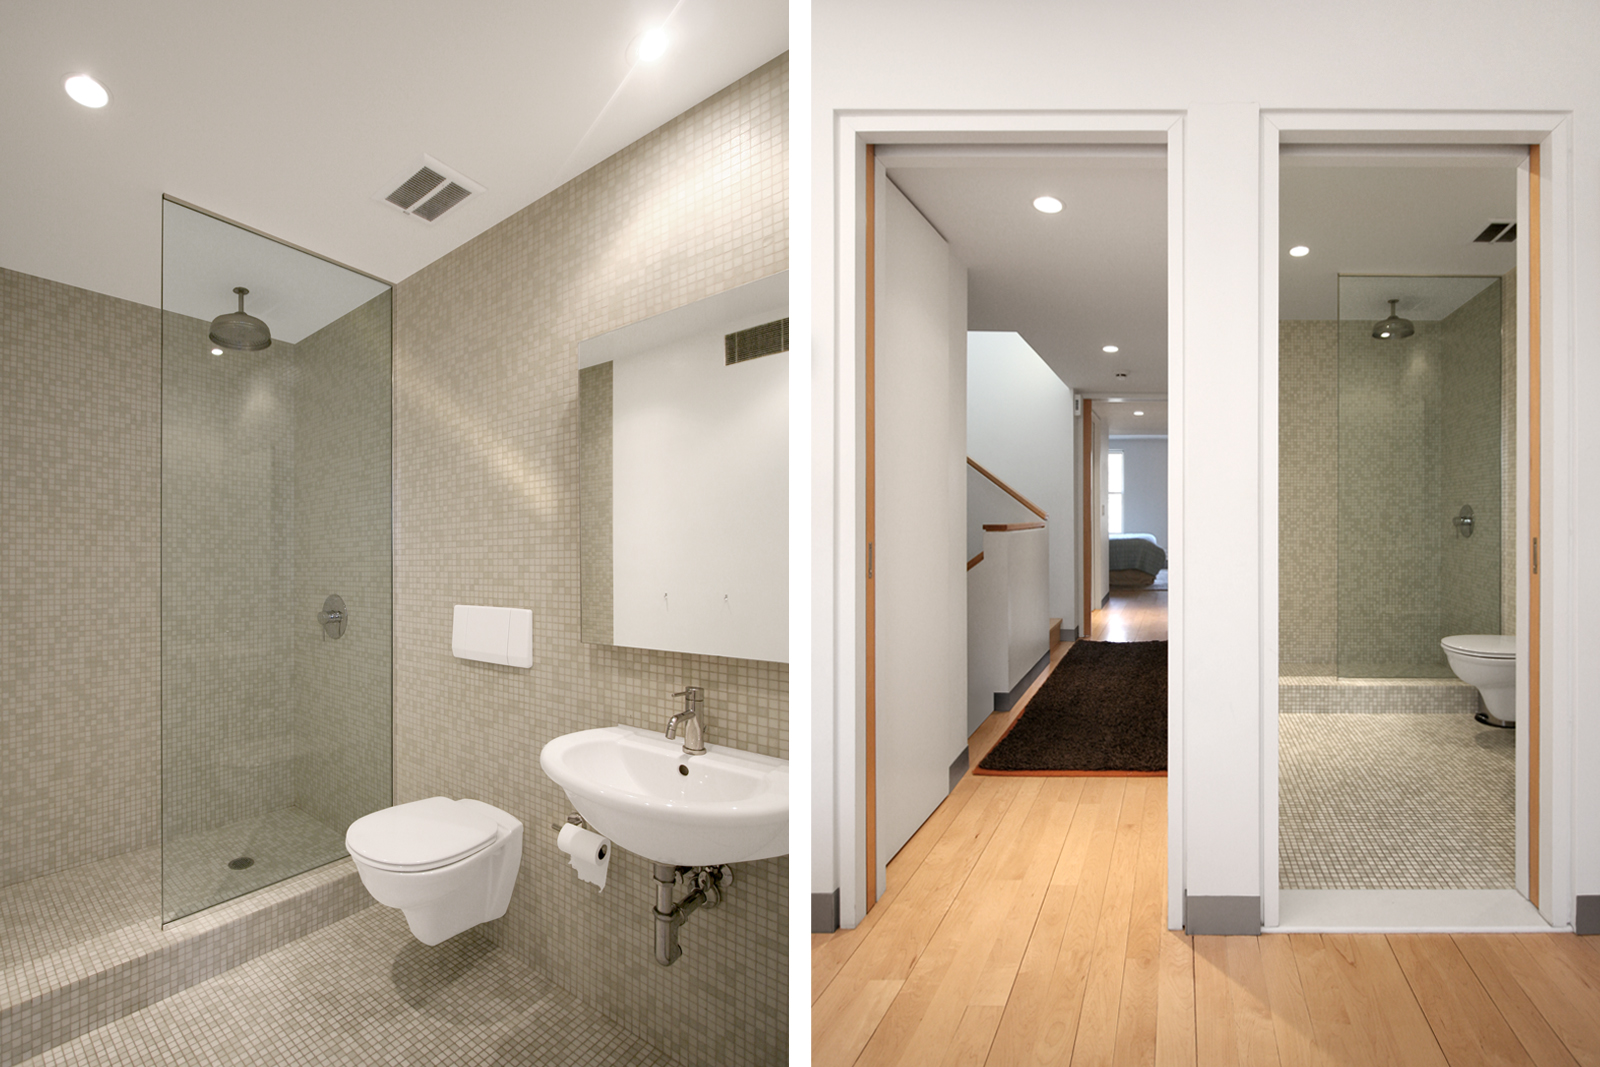 15-res4-resolution-4-architecture-modern-townhouse-residential-ewan-townhouse-interior-shower-bath-room.jpg